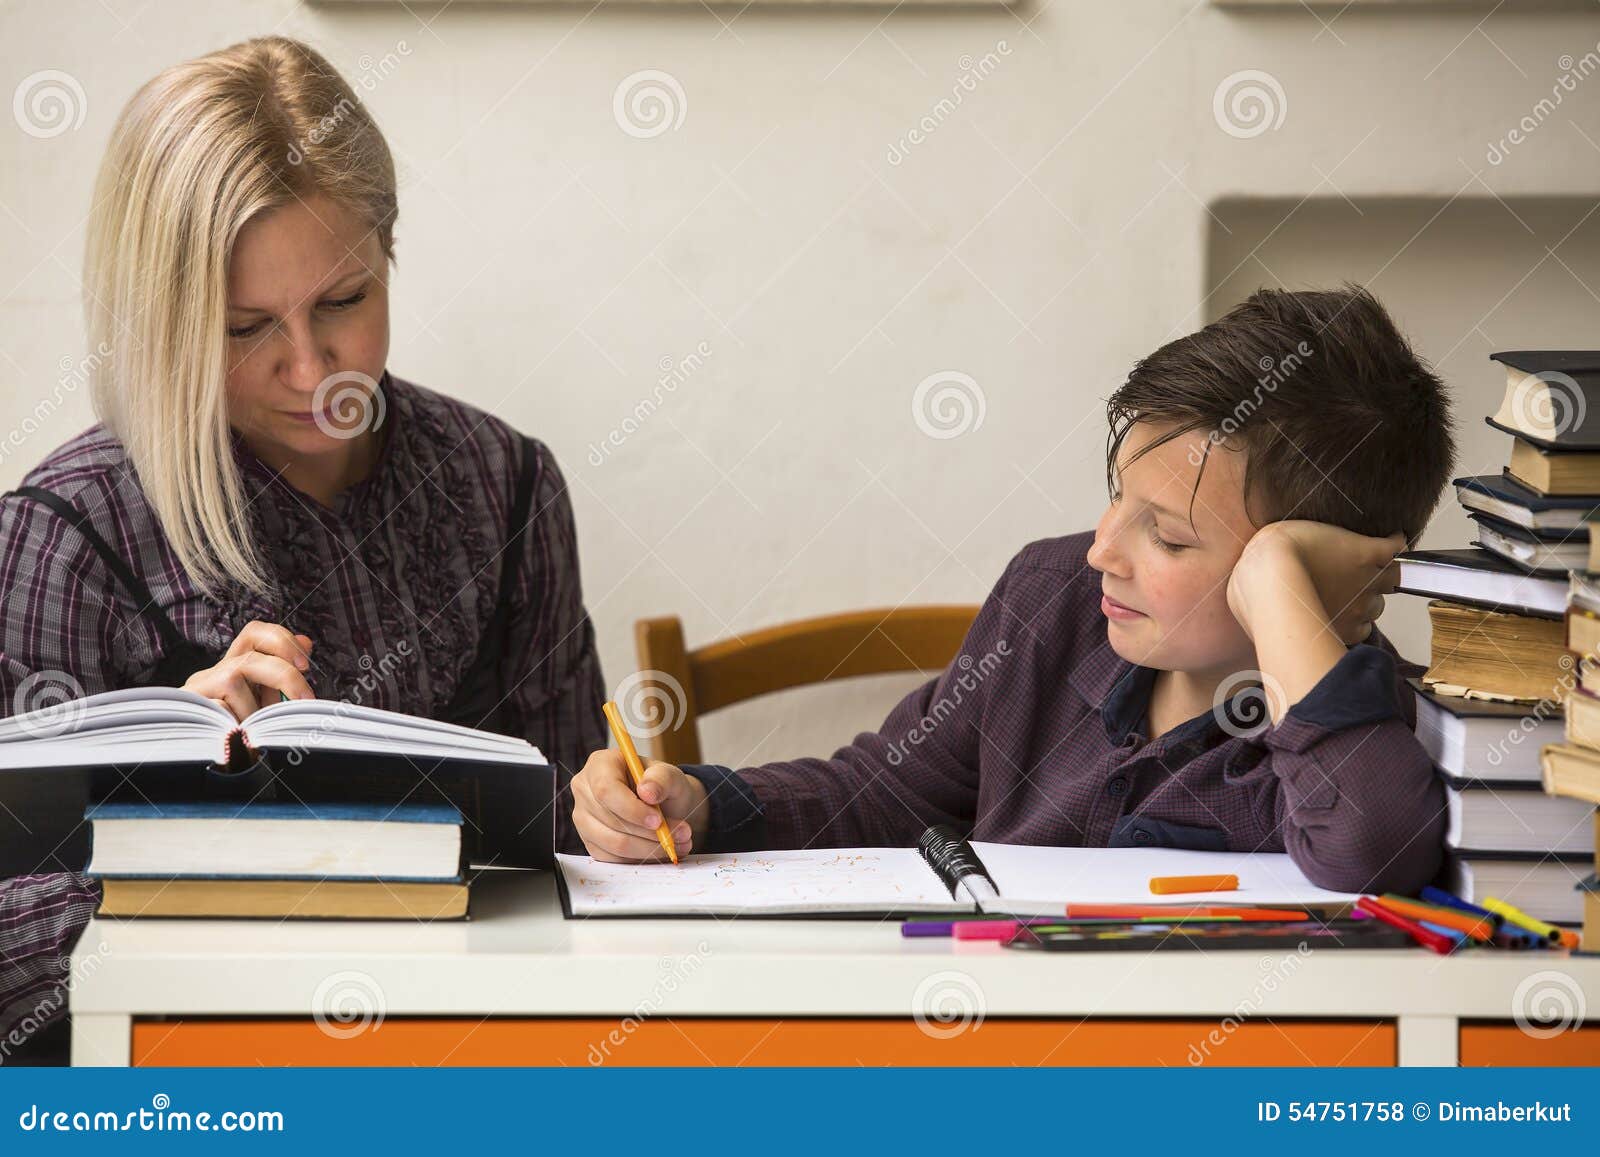 do tutors give homework